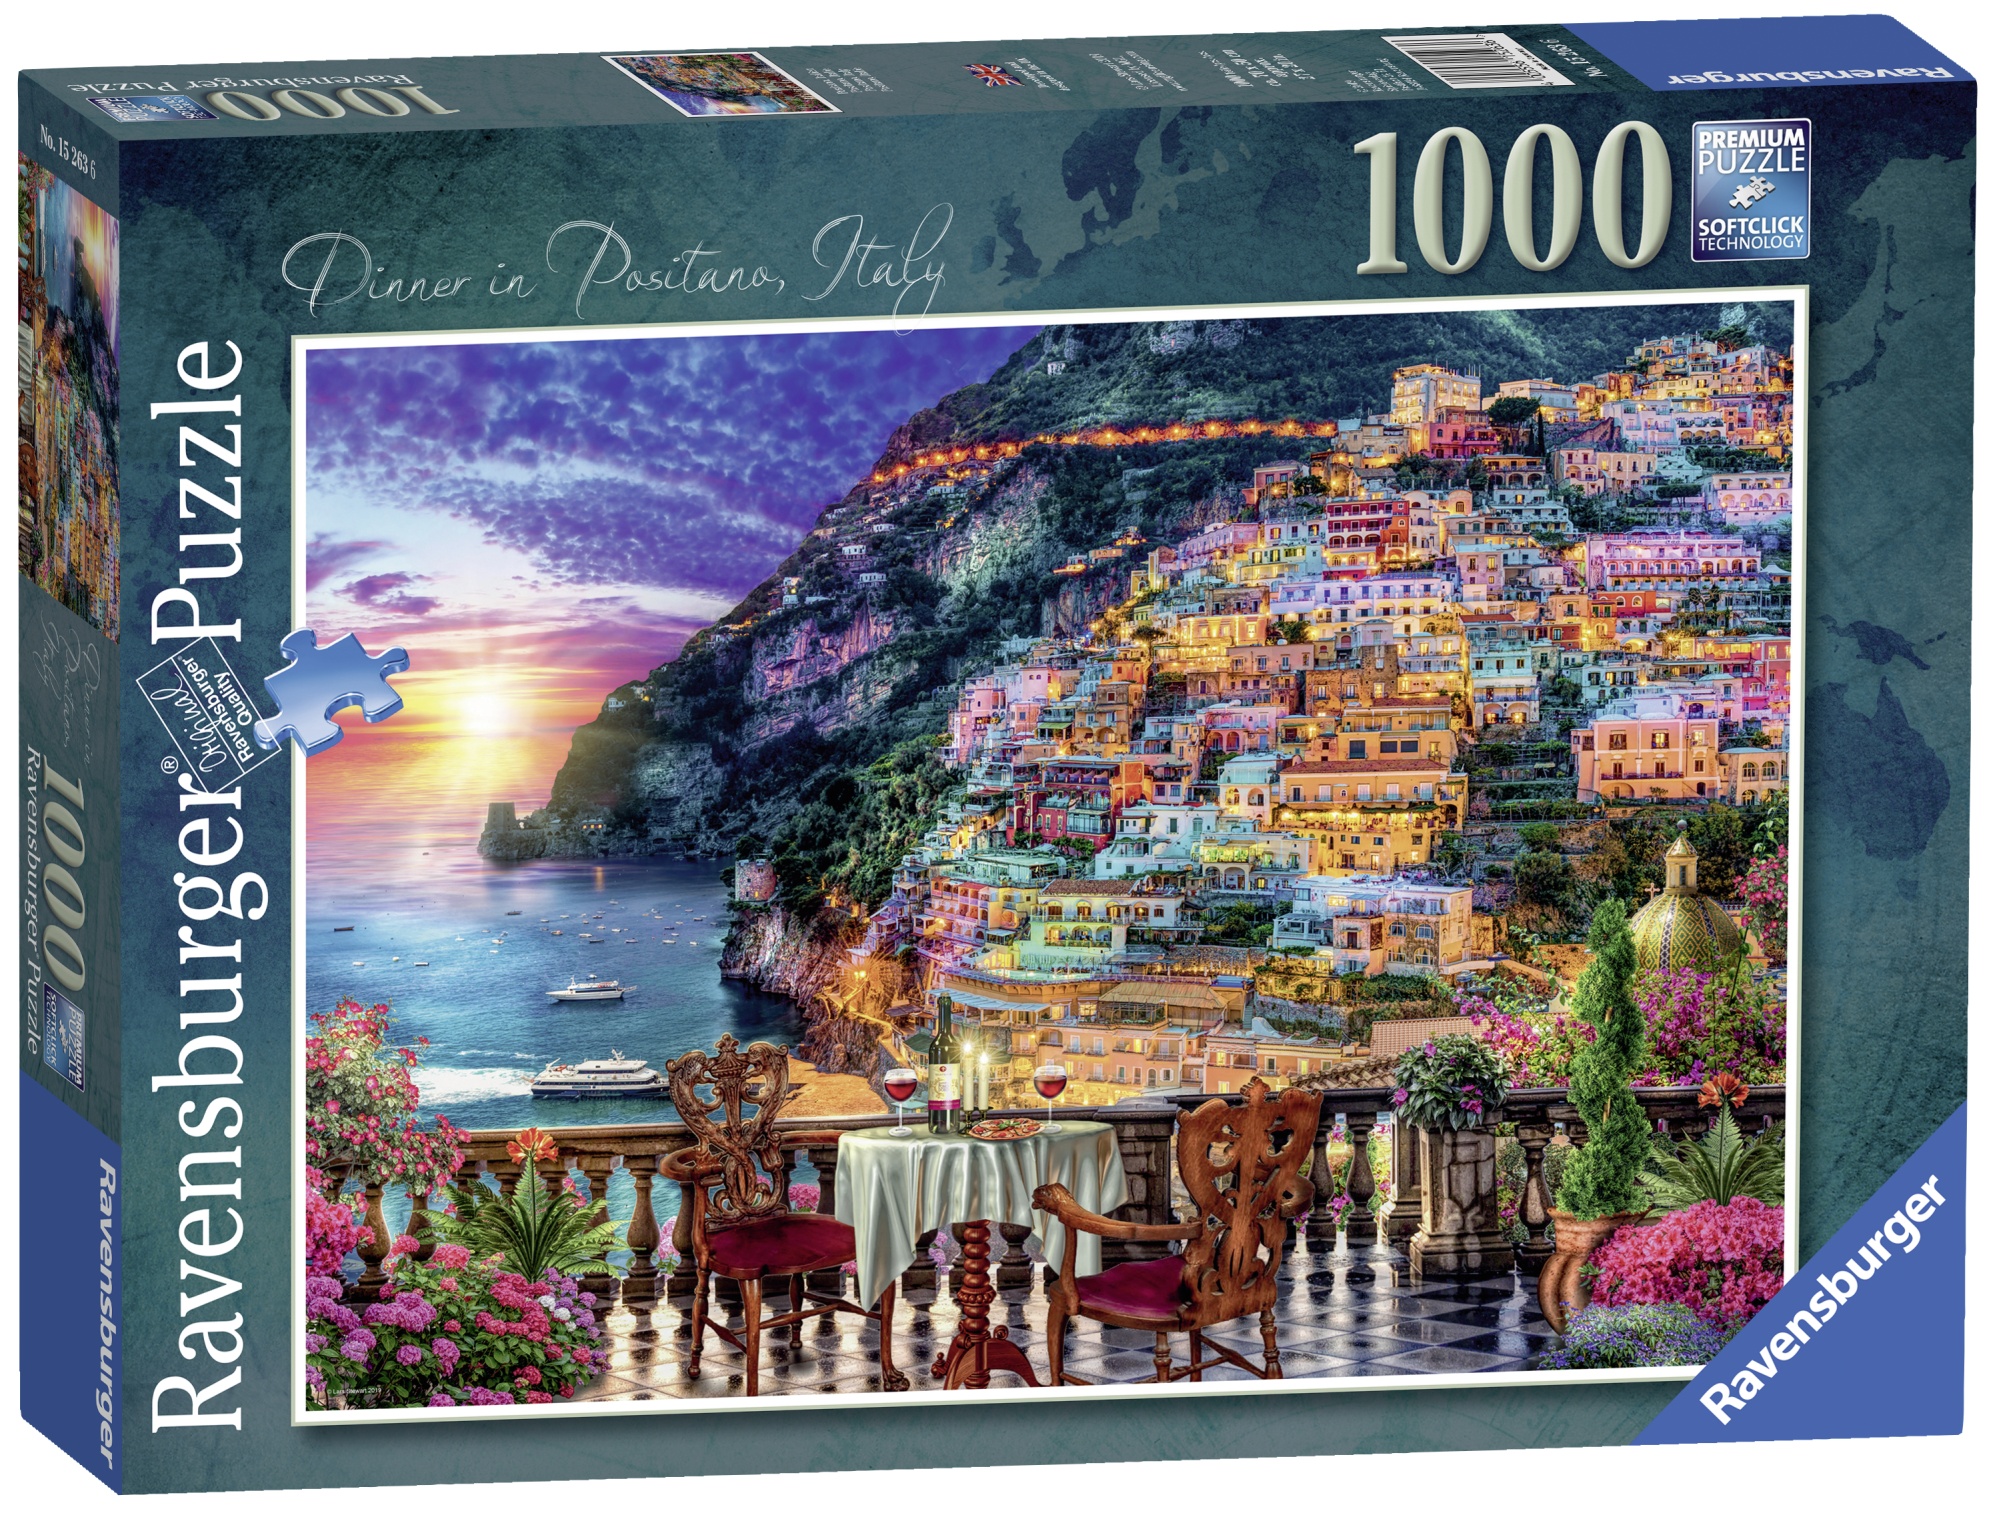 Puzzle Cina In Positano, 1000 Piese